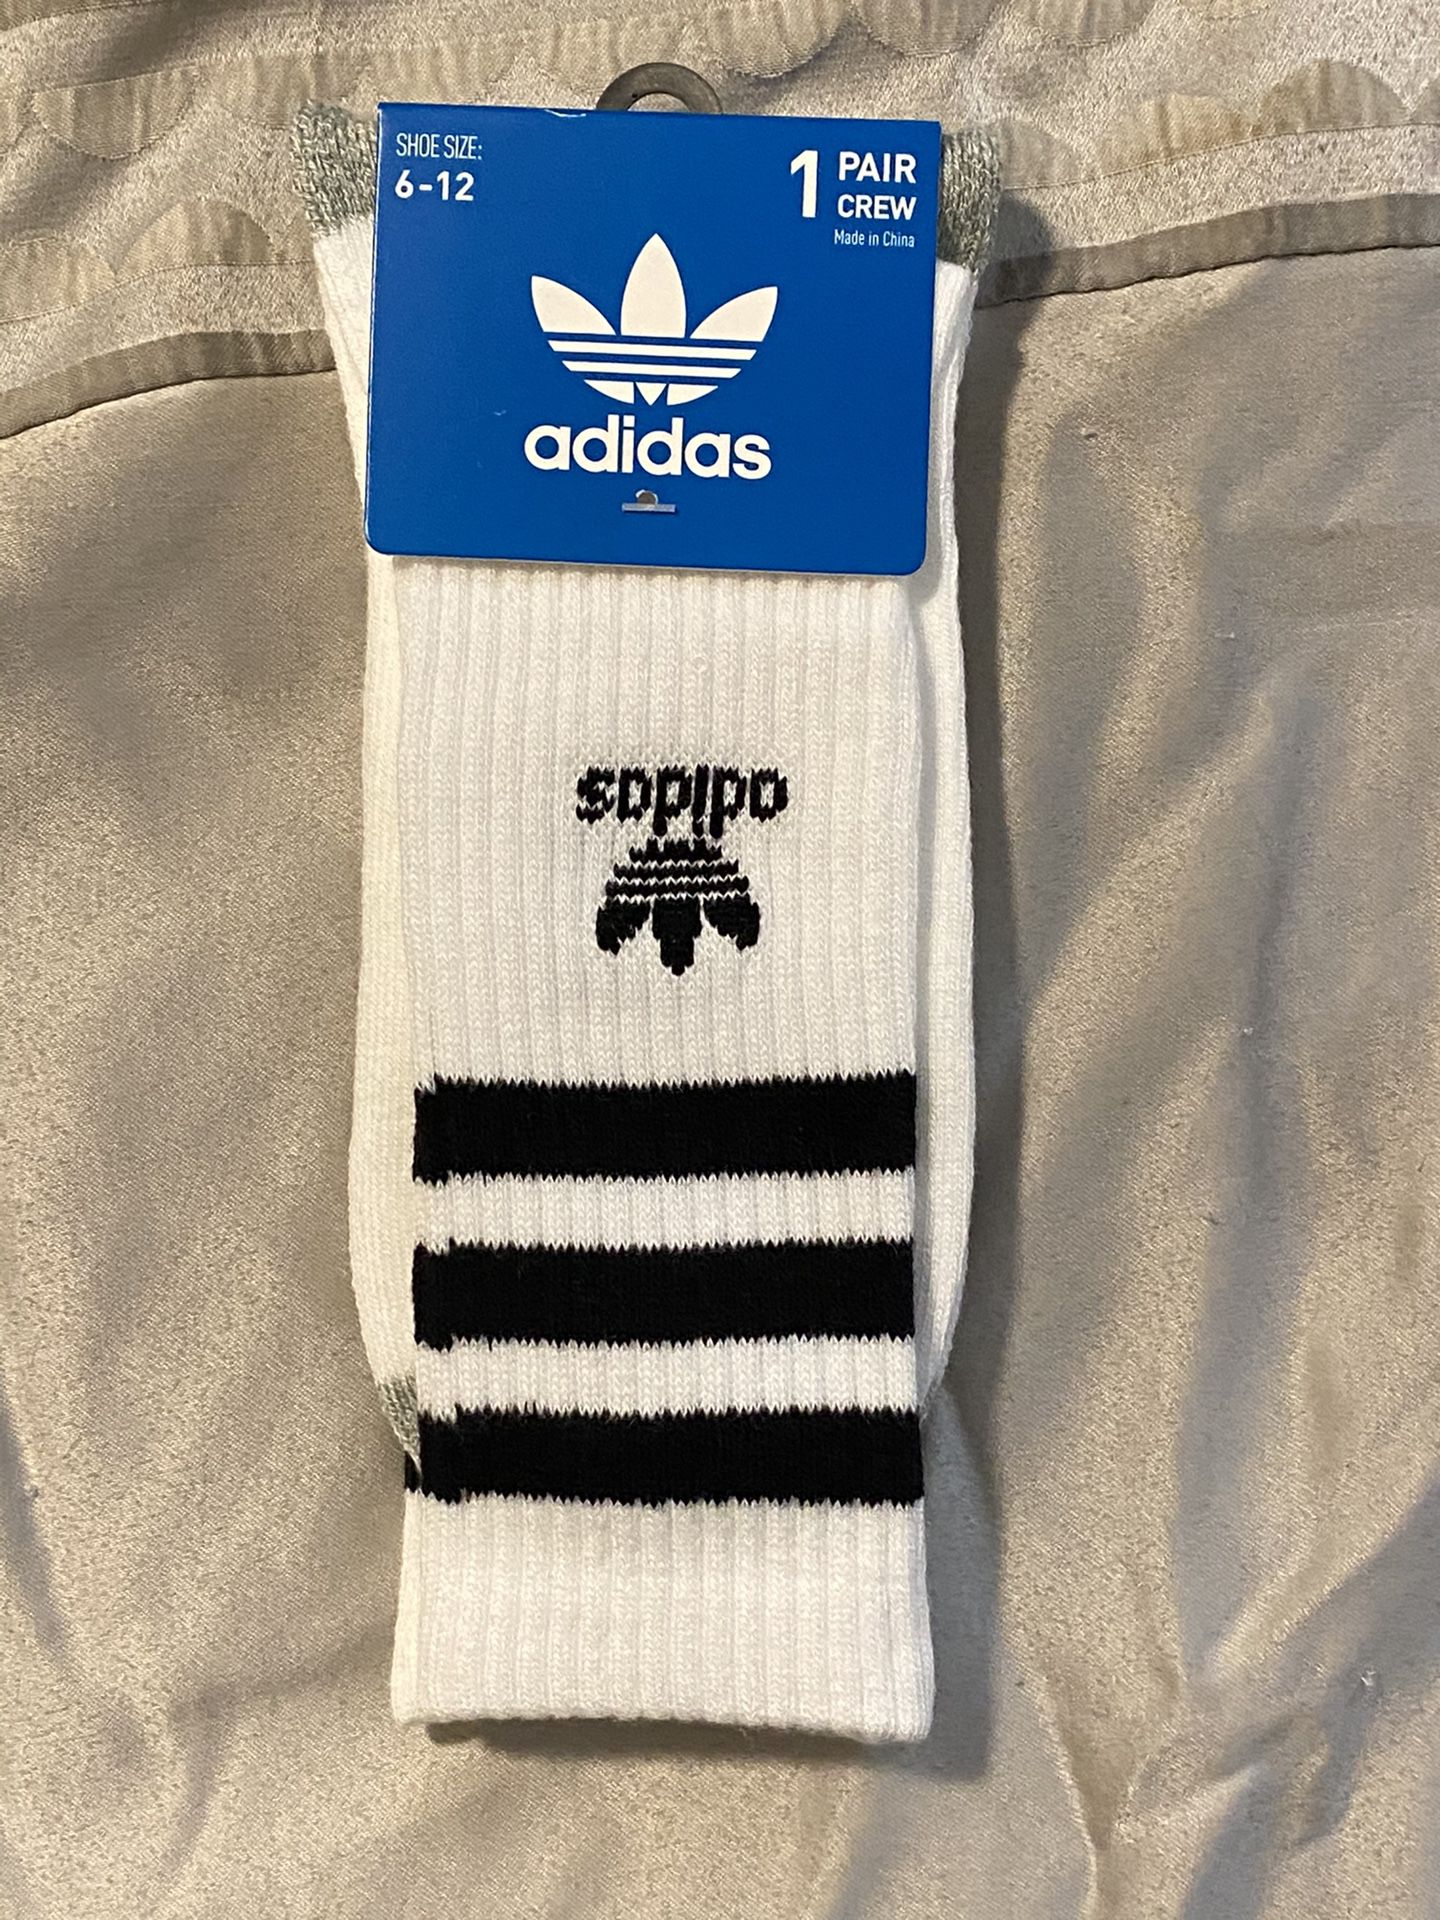 Adidas Original Crew Socks - NEW $6 a pair